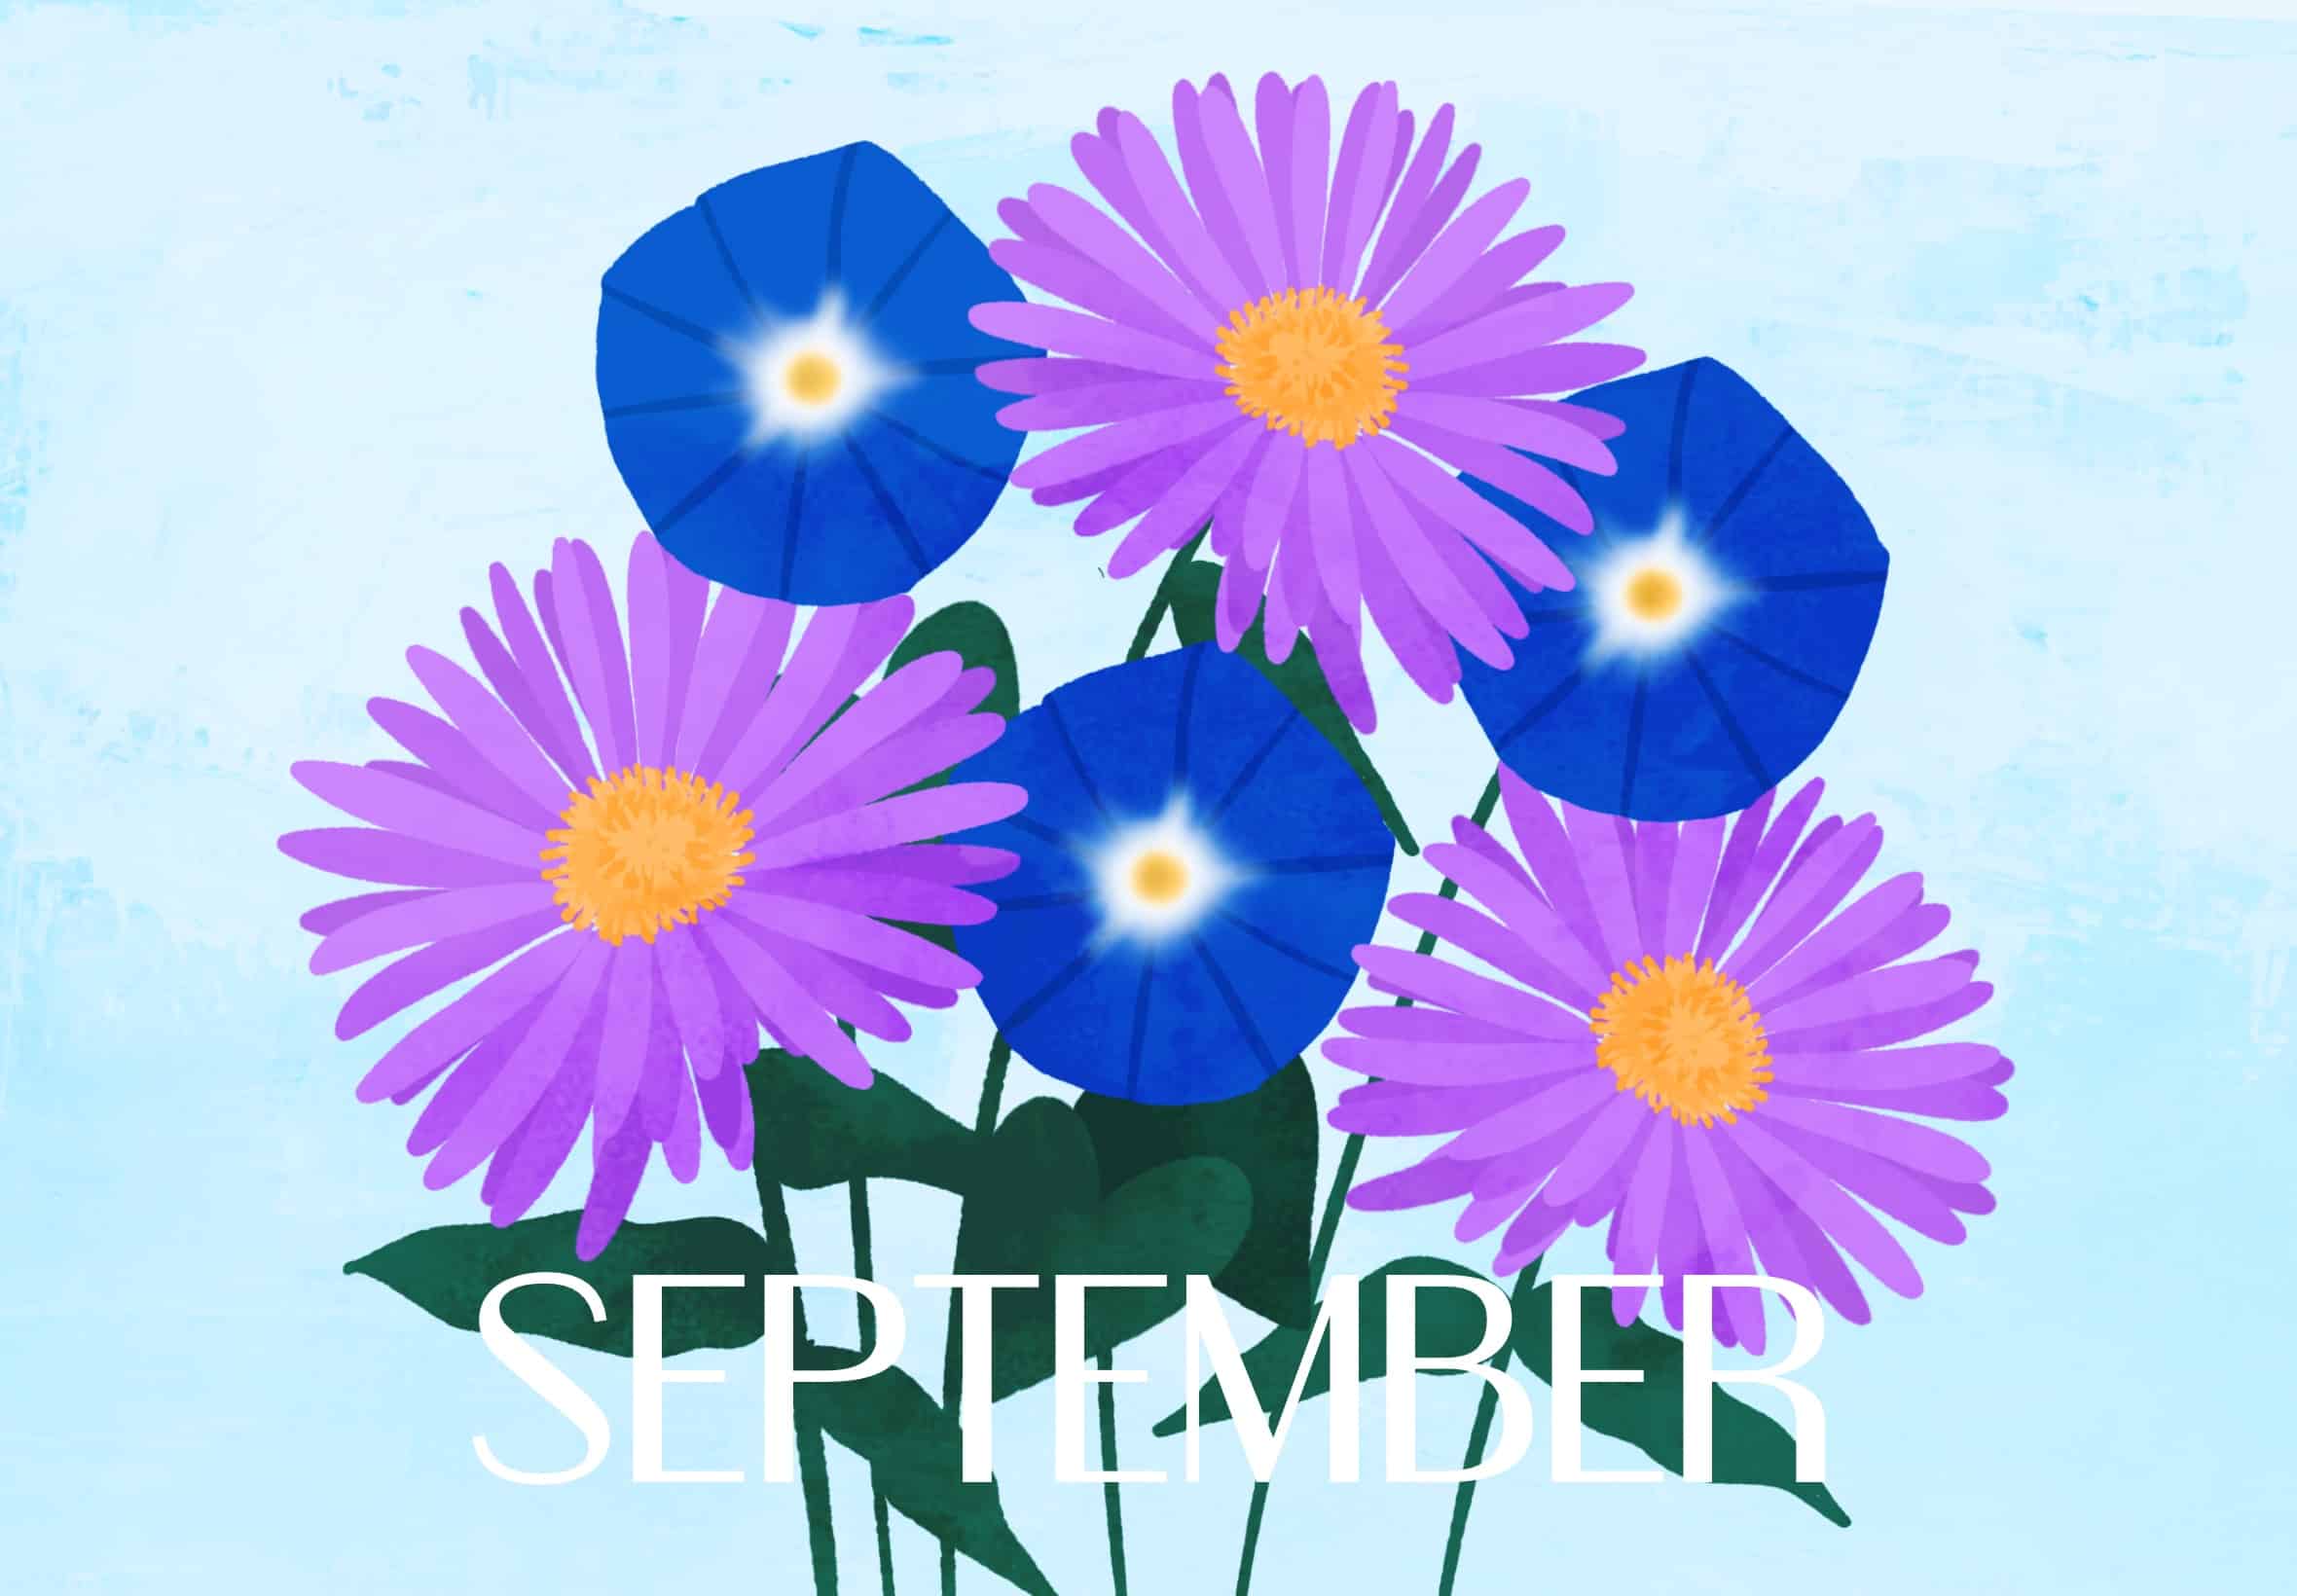 264 September Birth Flowers Images Stock Photos  Vectors  Shutterstock